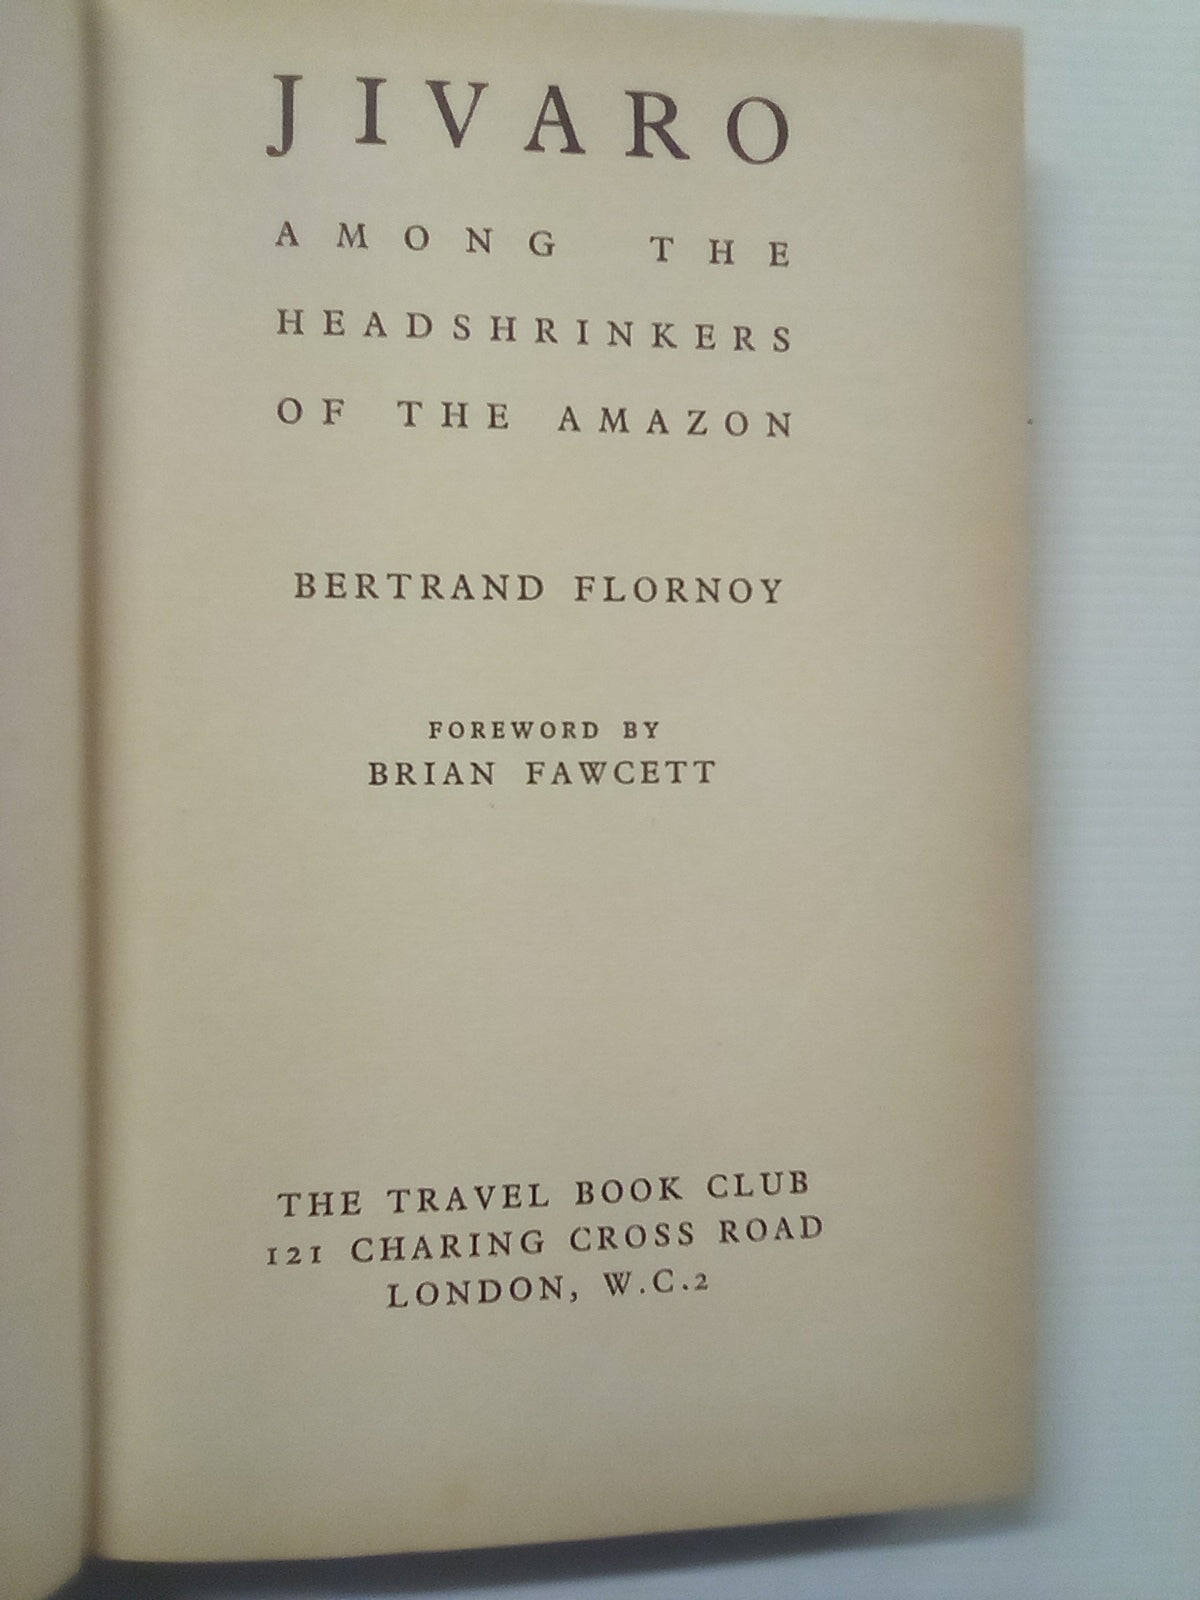 Jivaro - Among the Headshrinkers of the Amazon (1953) by Bertrand Flornoy